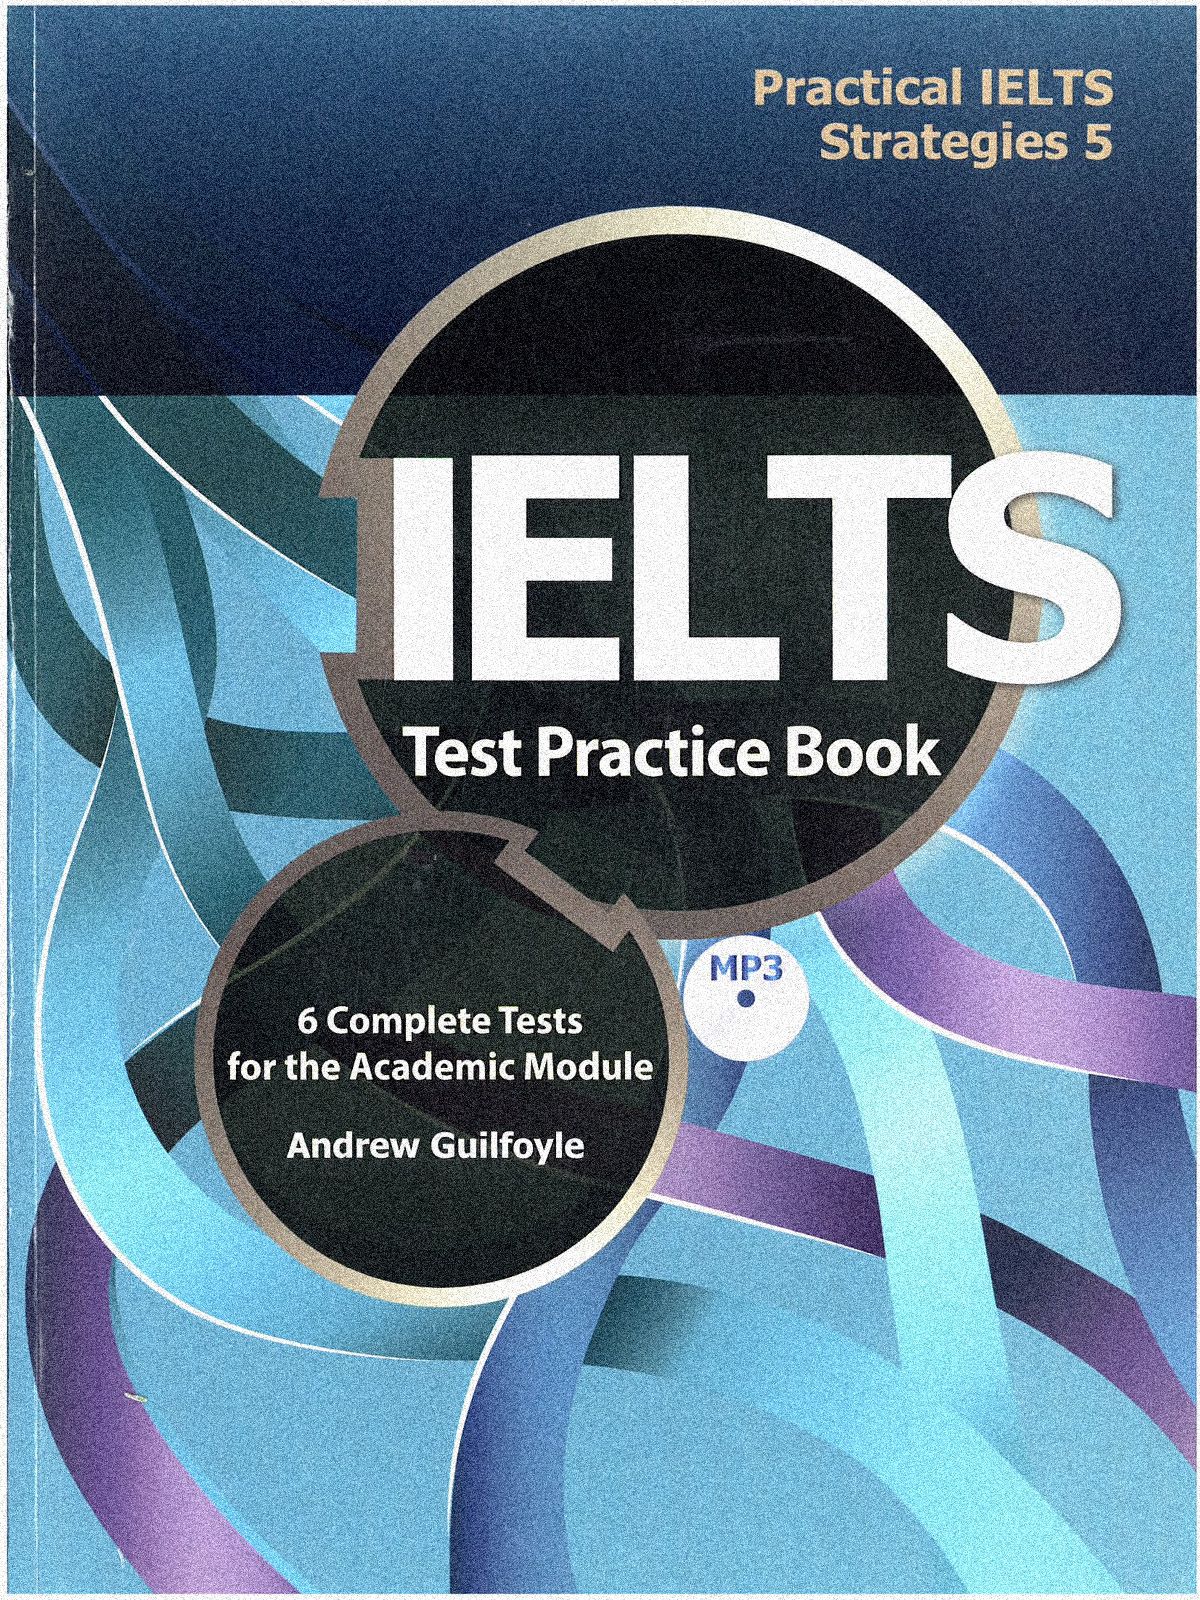 Practical Test Strategies 5 - IELTS Practical Test Book